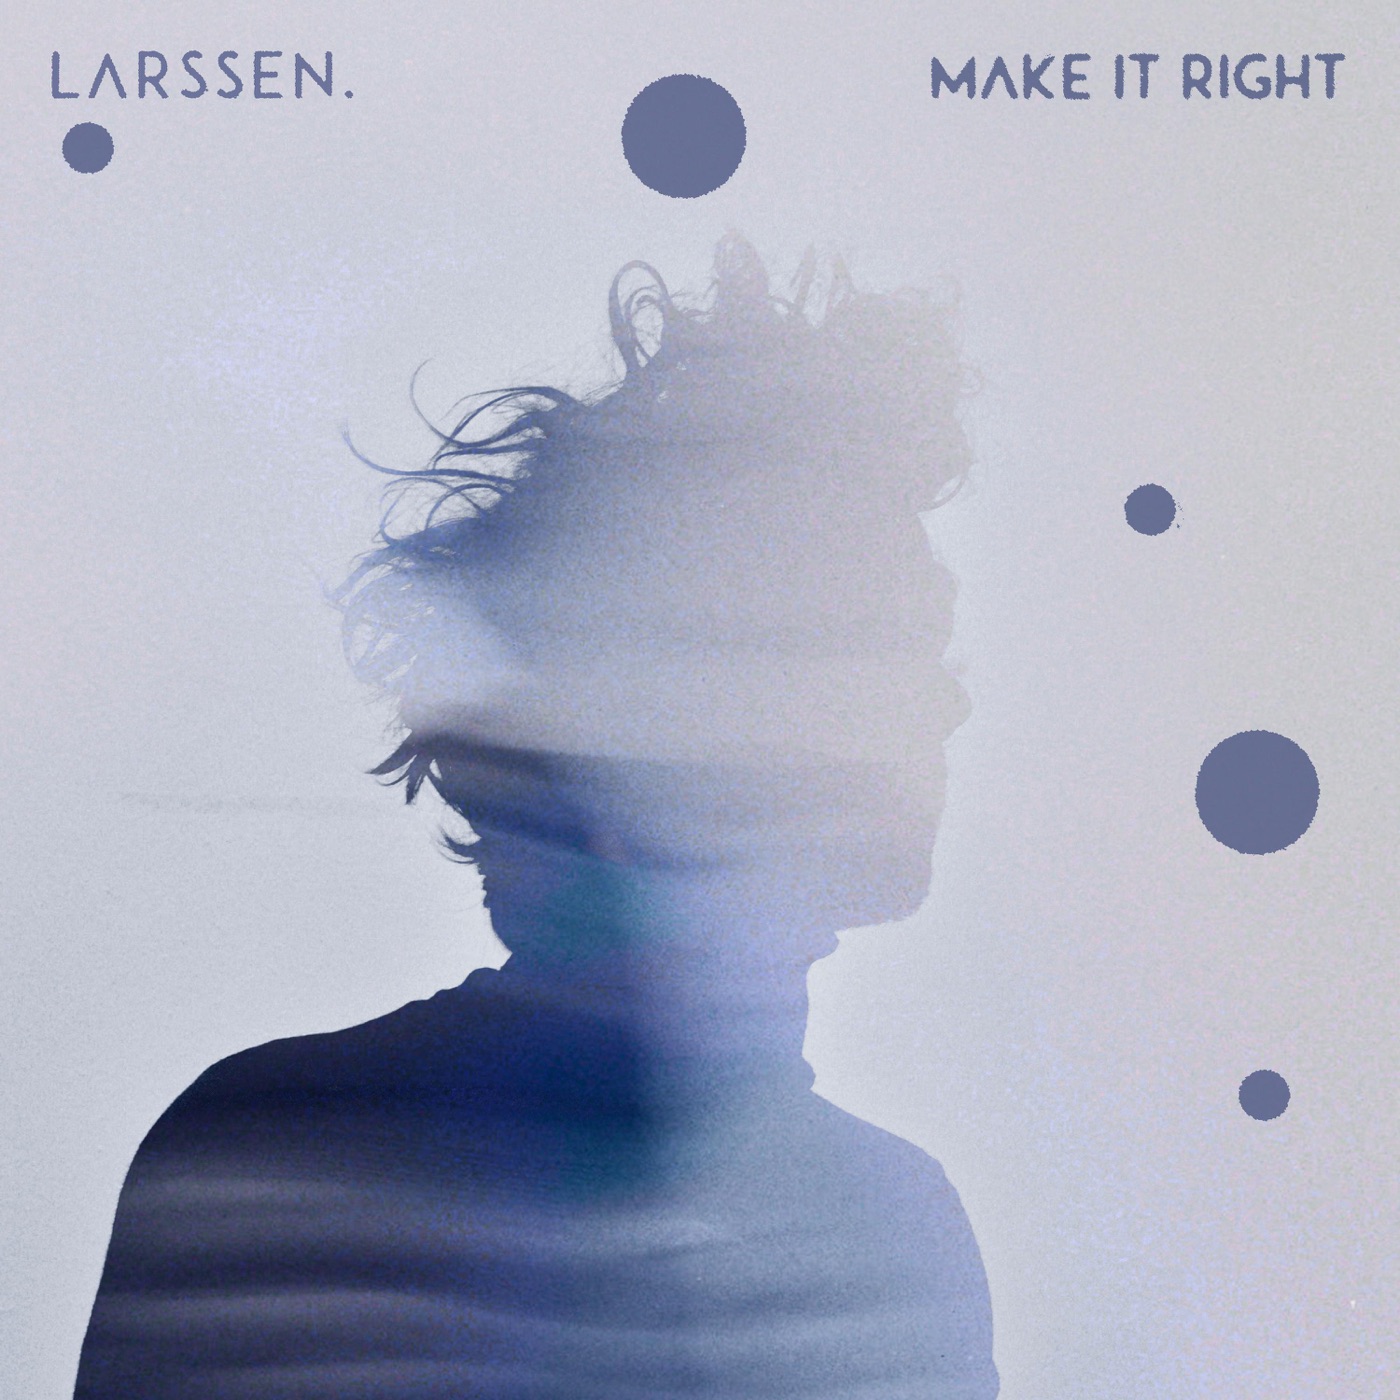 Make It Right by Larssen.